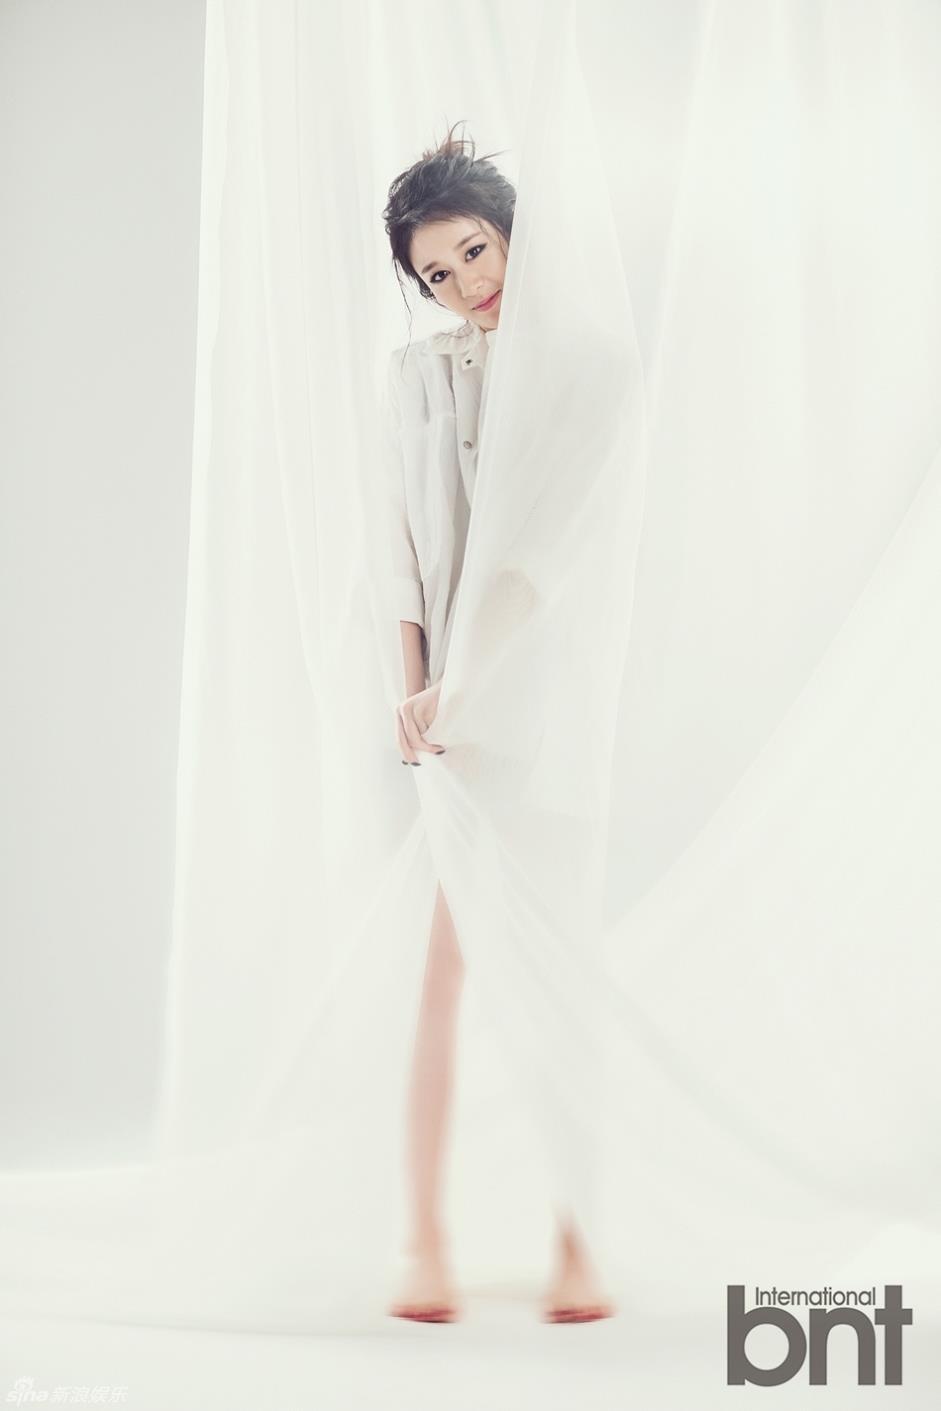 T-ara智妍写真 紧身牛仔秀性感身材,T-ara智妍写真 紧身牛仔秀性感身材